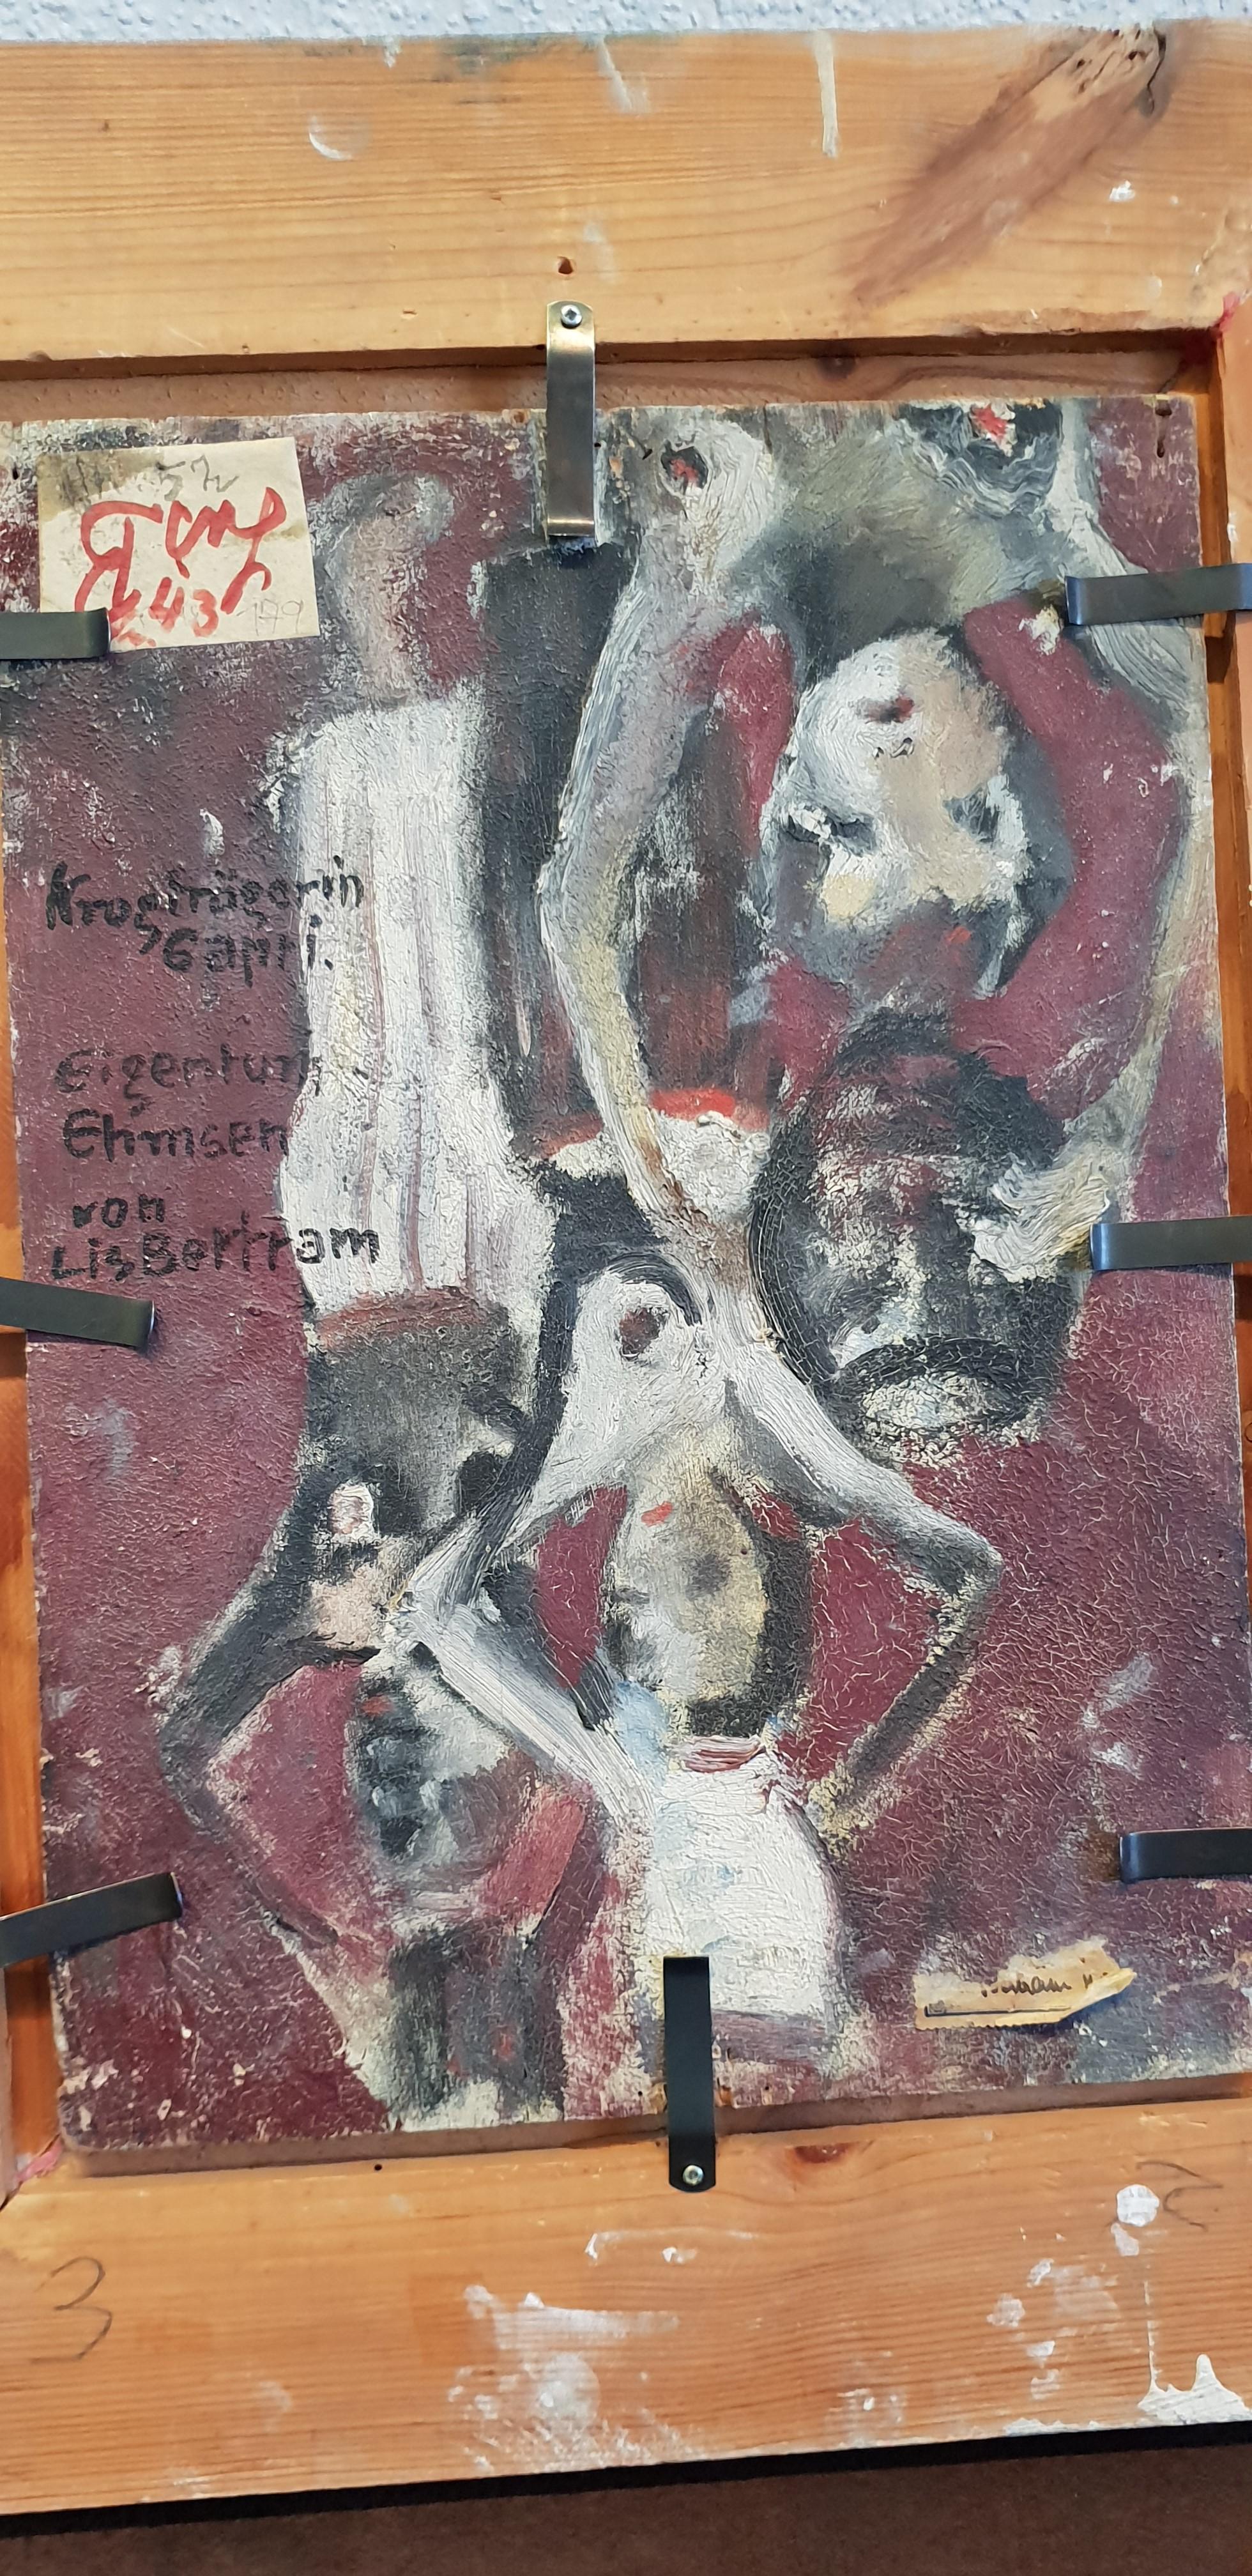 Oil on wood, Germany, around 1920
Lis Bertram-Ehmsen (1897-1986) – German Painter and wife of artist Heinrich Ehmsen
Signed at the lower left: Bertram. Inscribed on the back: Krugträgerin Capri Eigentum Ehmsen von Lis Bertram and painted with jug